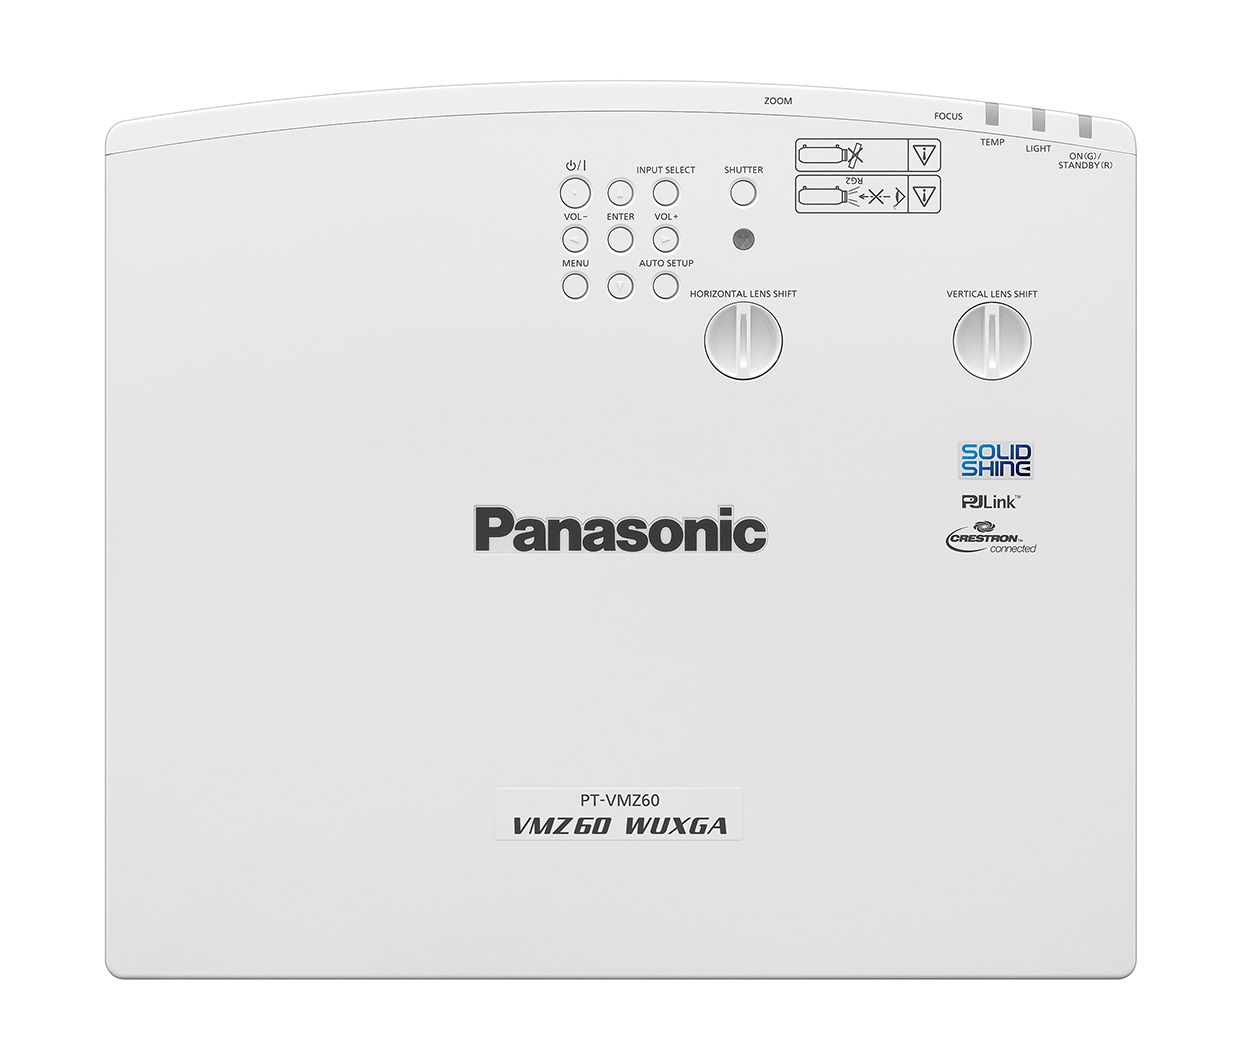 Product: Panasonic PT-VMZ71U7 7000lm WUXGA LCD Laser Projector